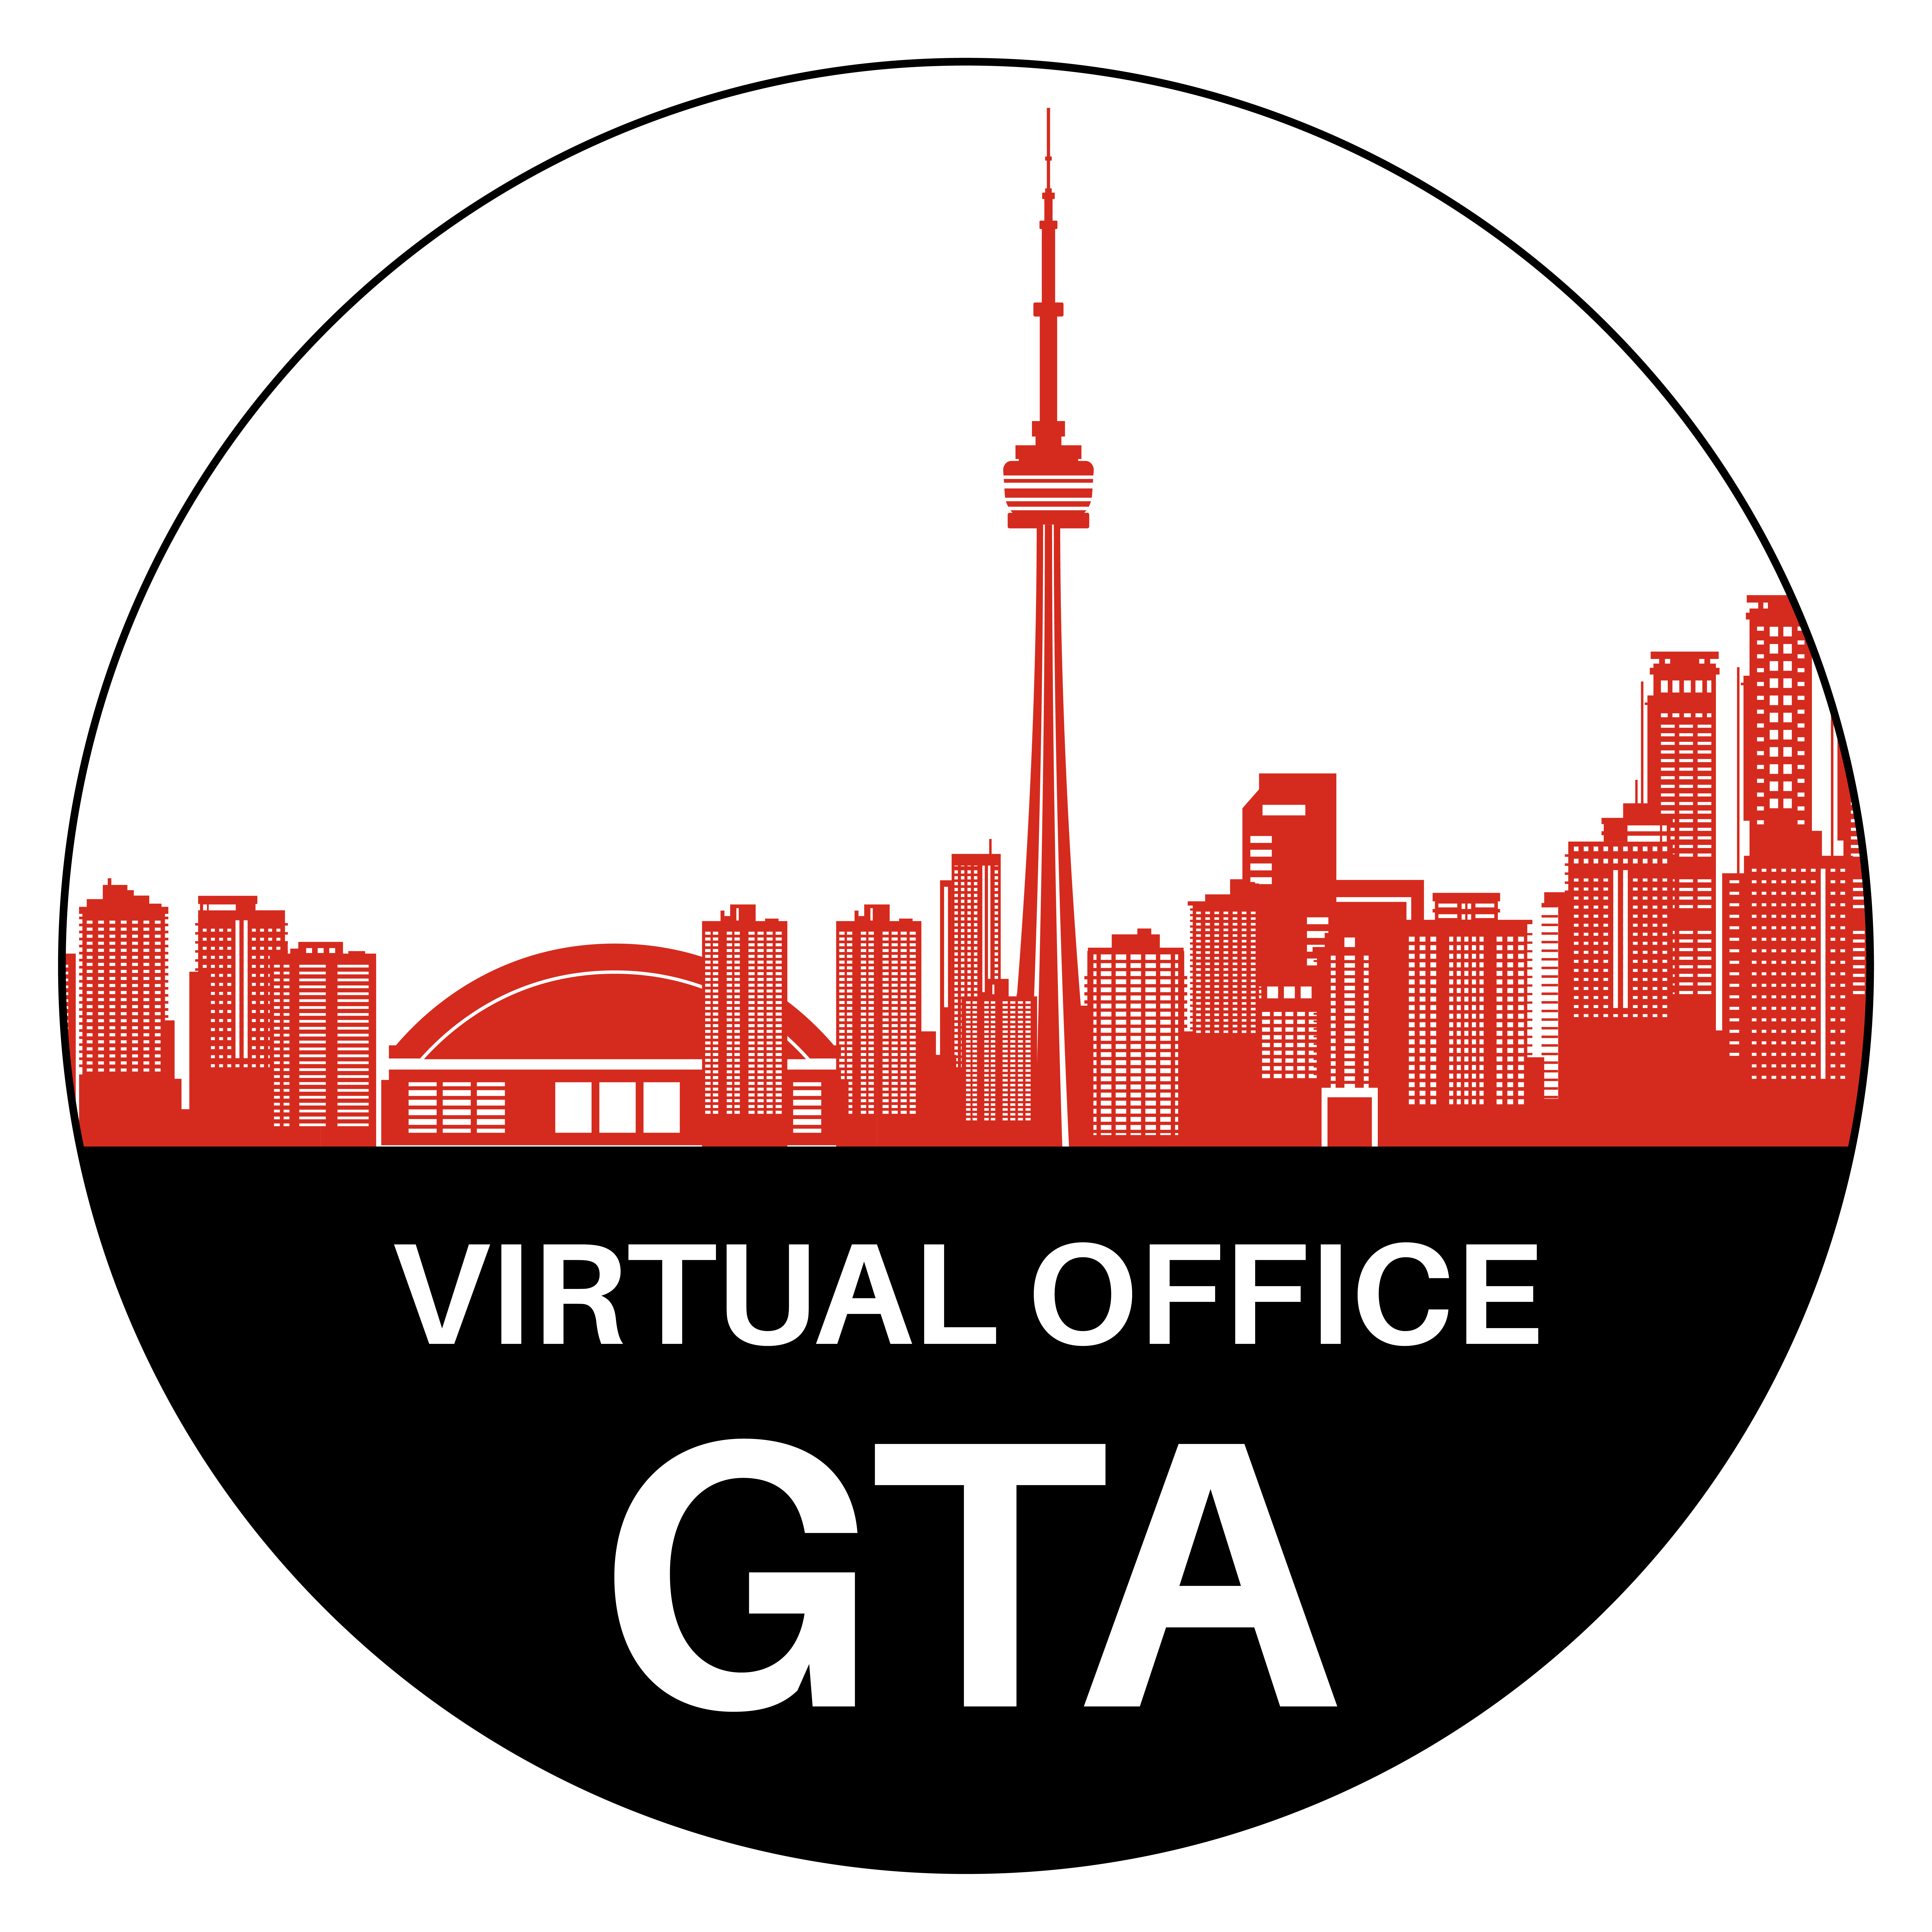 GTA Virtual Office